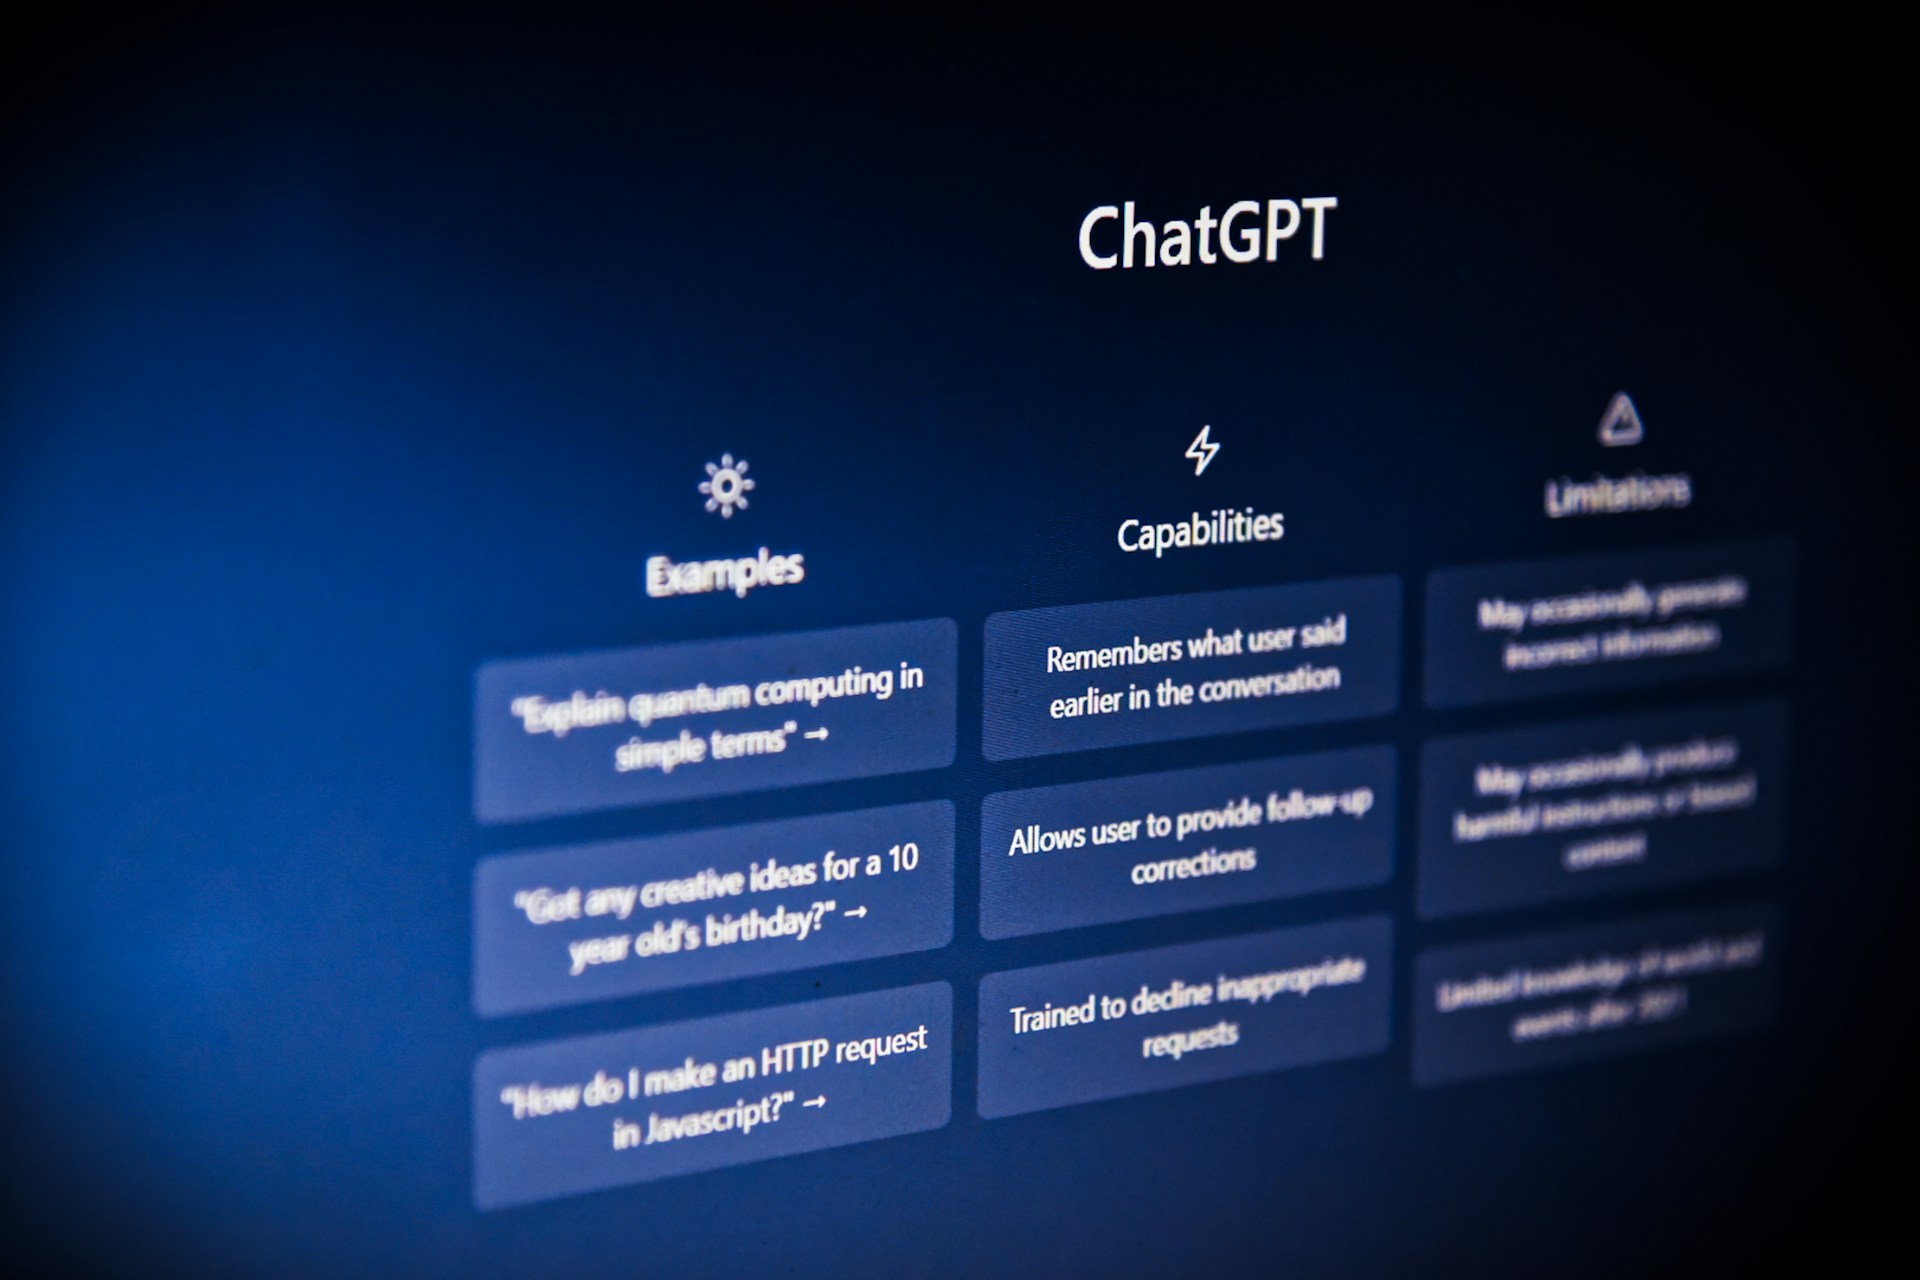 hackers may access ChatGPT conversations